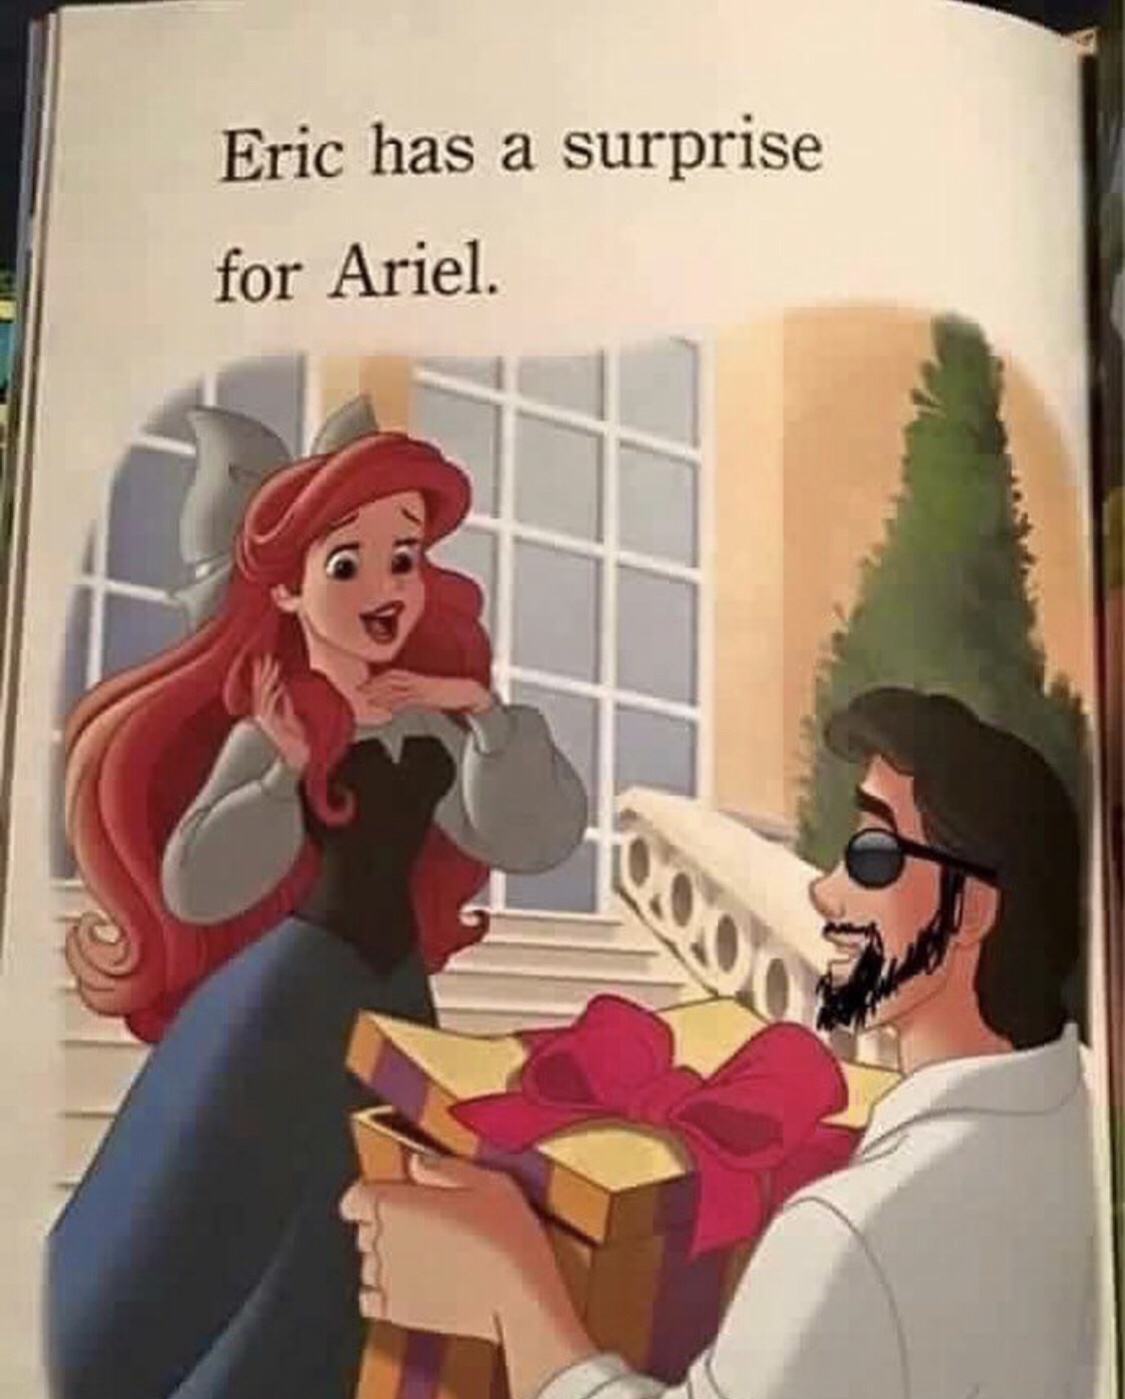 ariel dick in a box meme - Eric has a surprise for Ariel